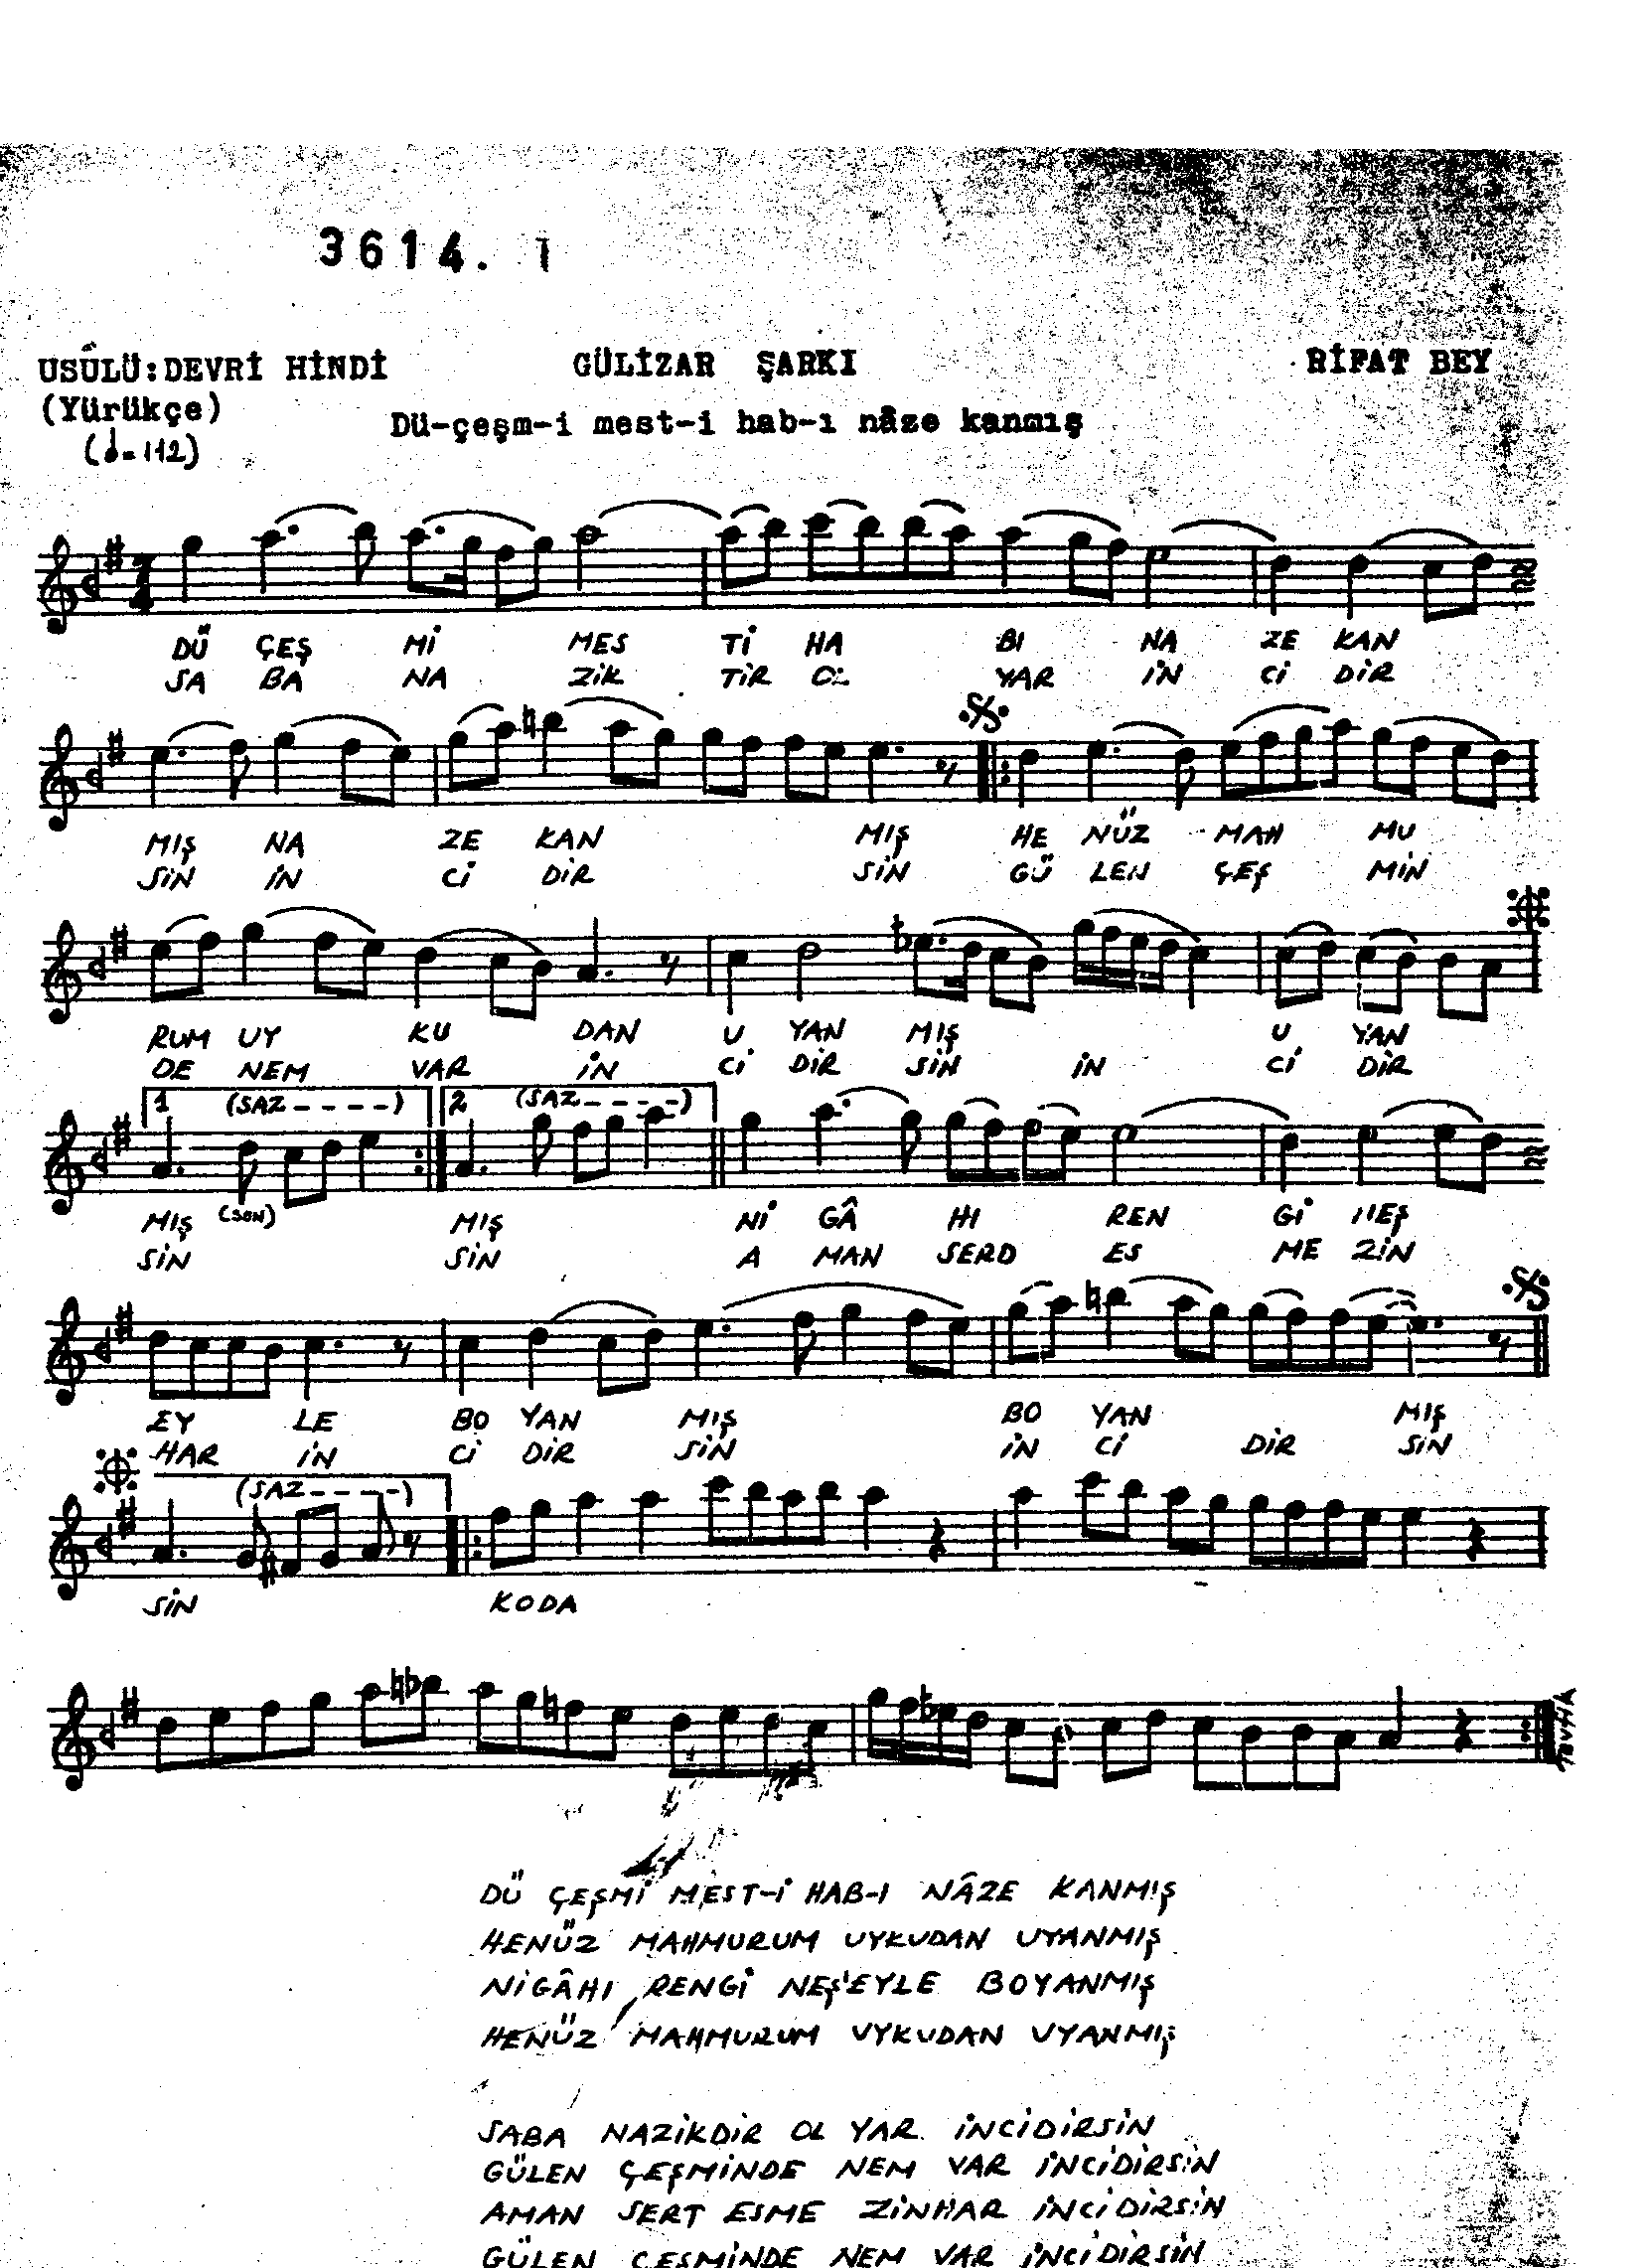 Gülizâr - Şarkı - Rif'at Bey - Sayfa 1